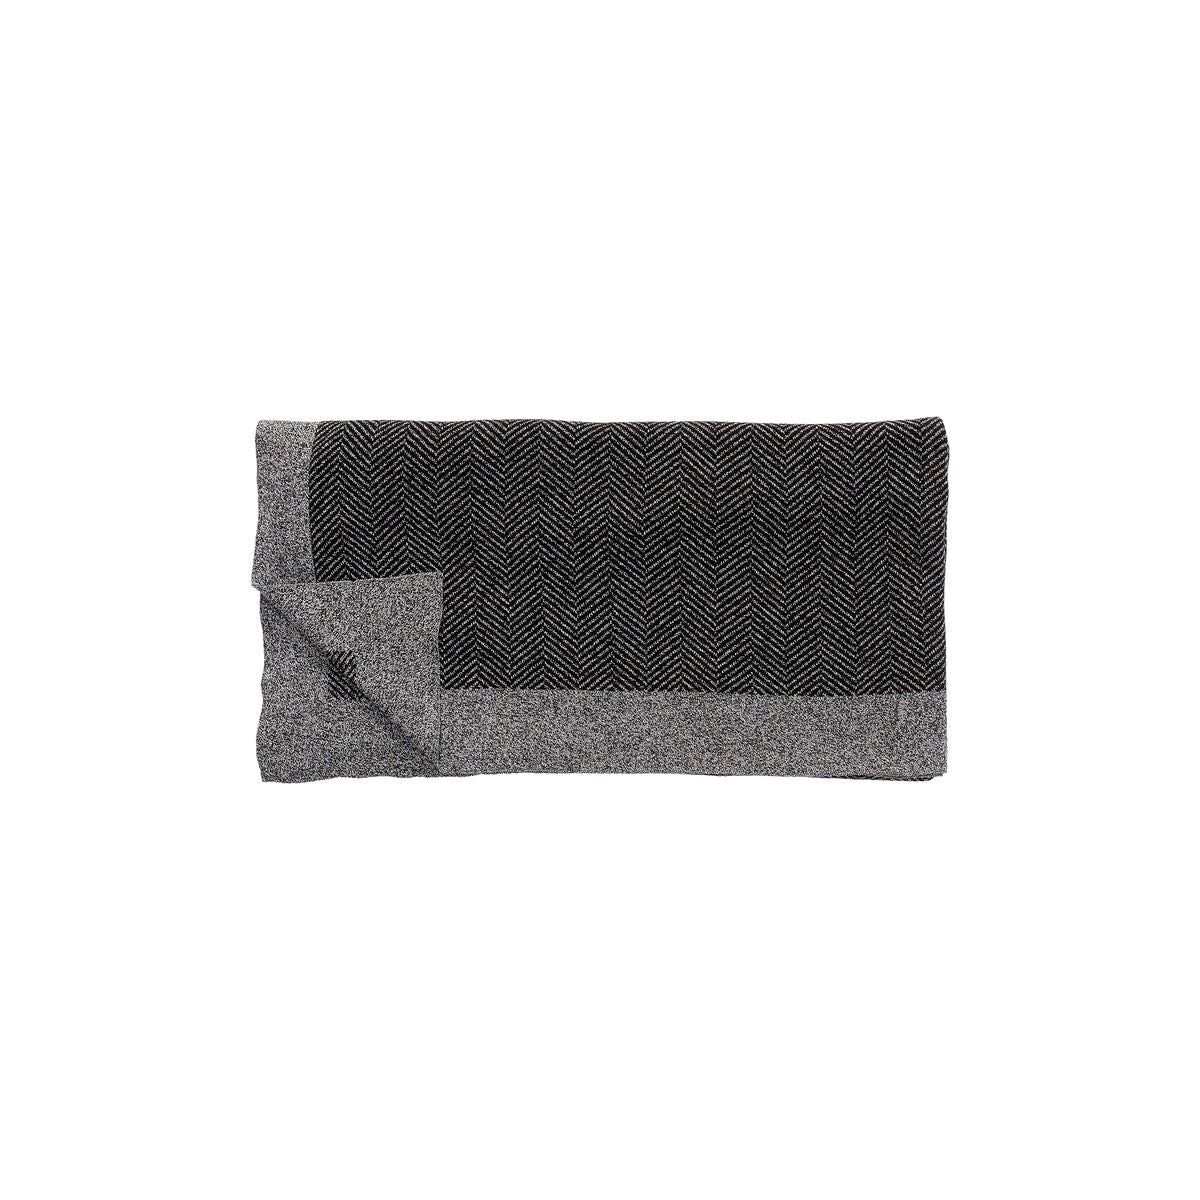 Decke, grau-schwarz, Zickzackmuster, 130 x 200cm - mueggelig